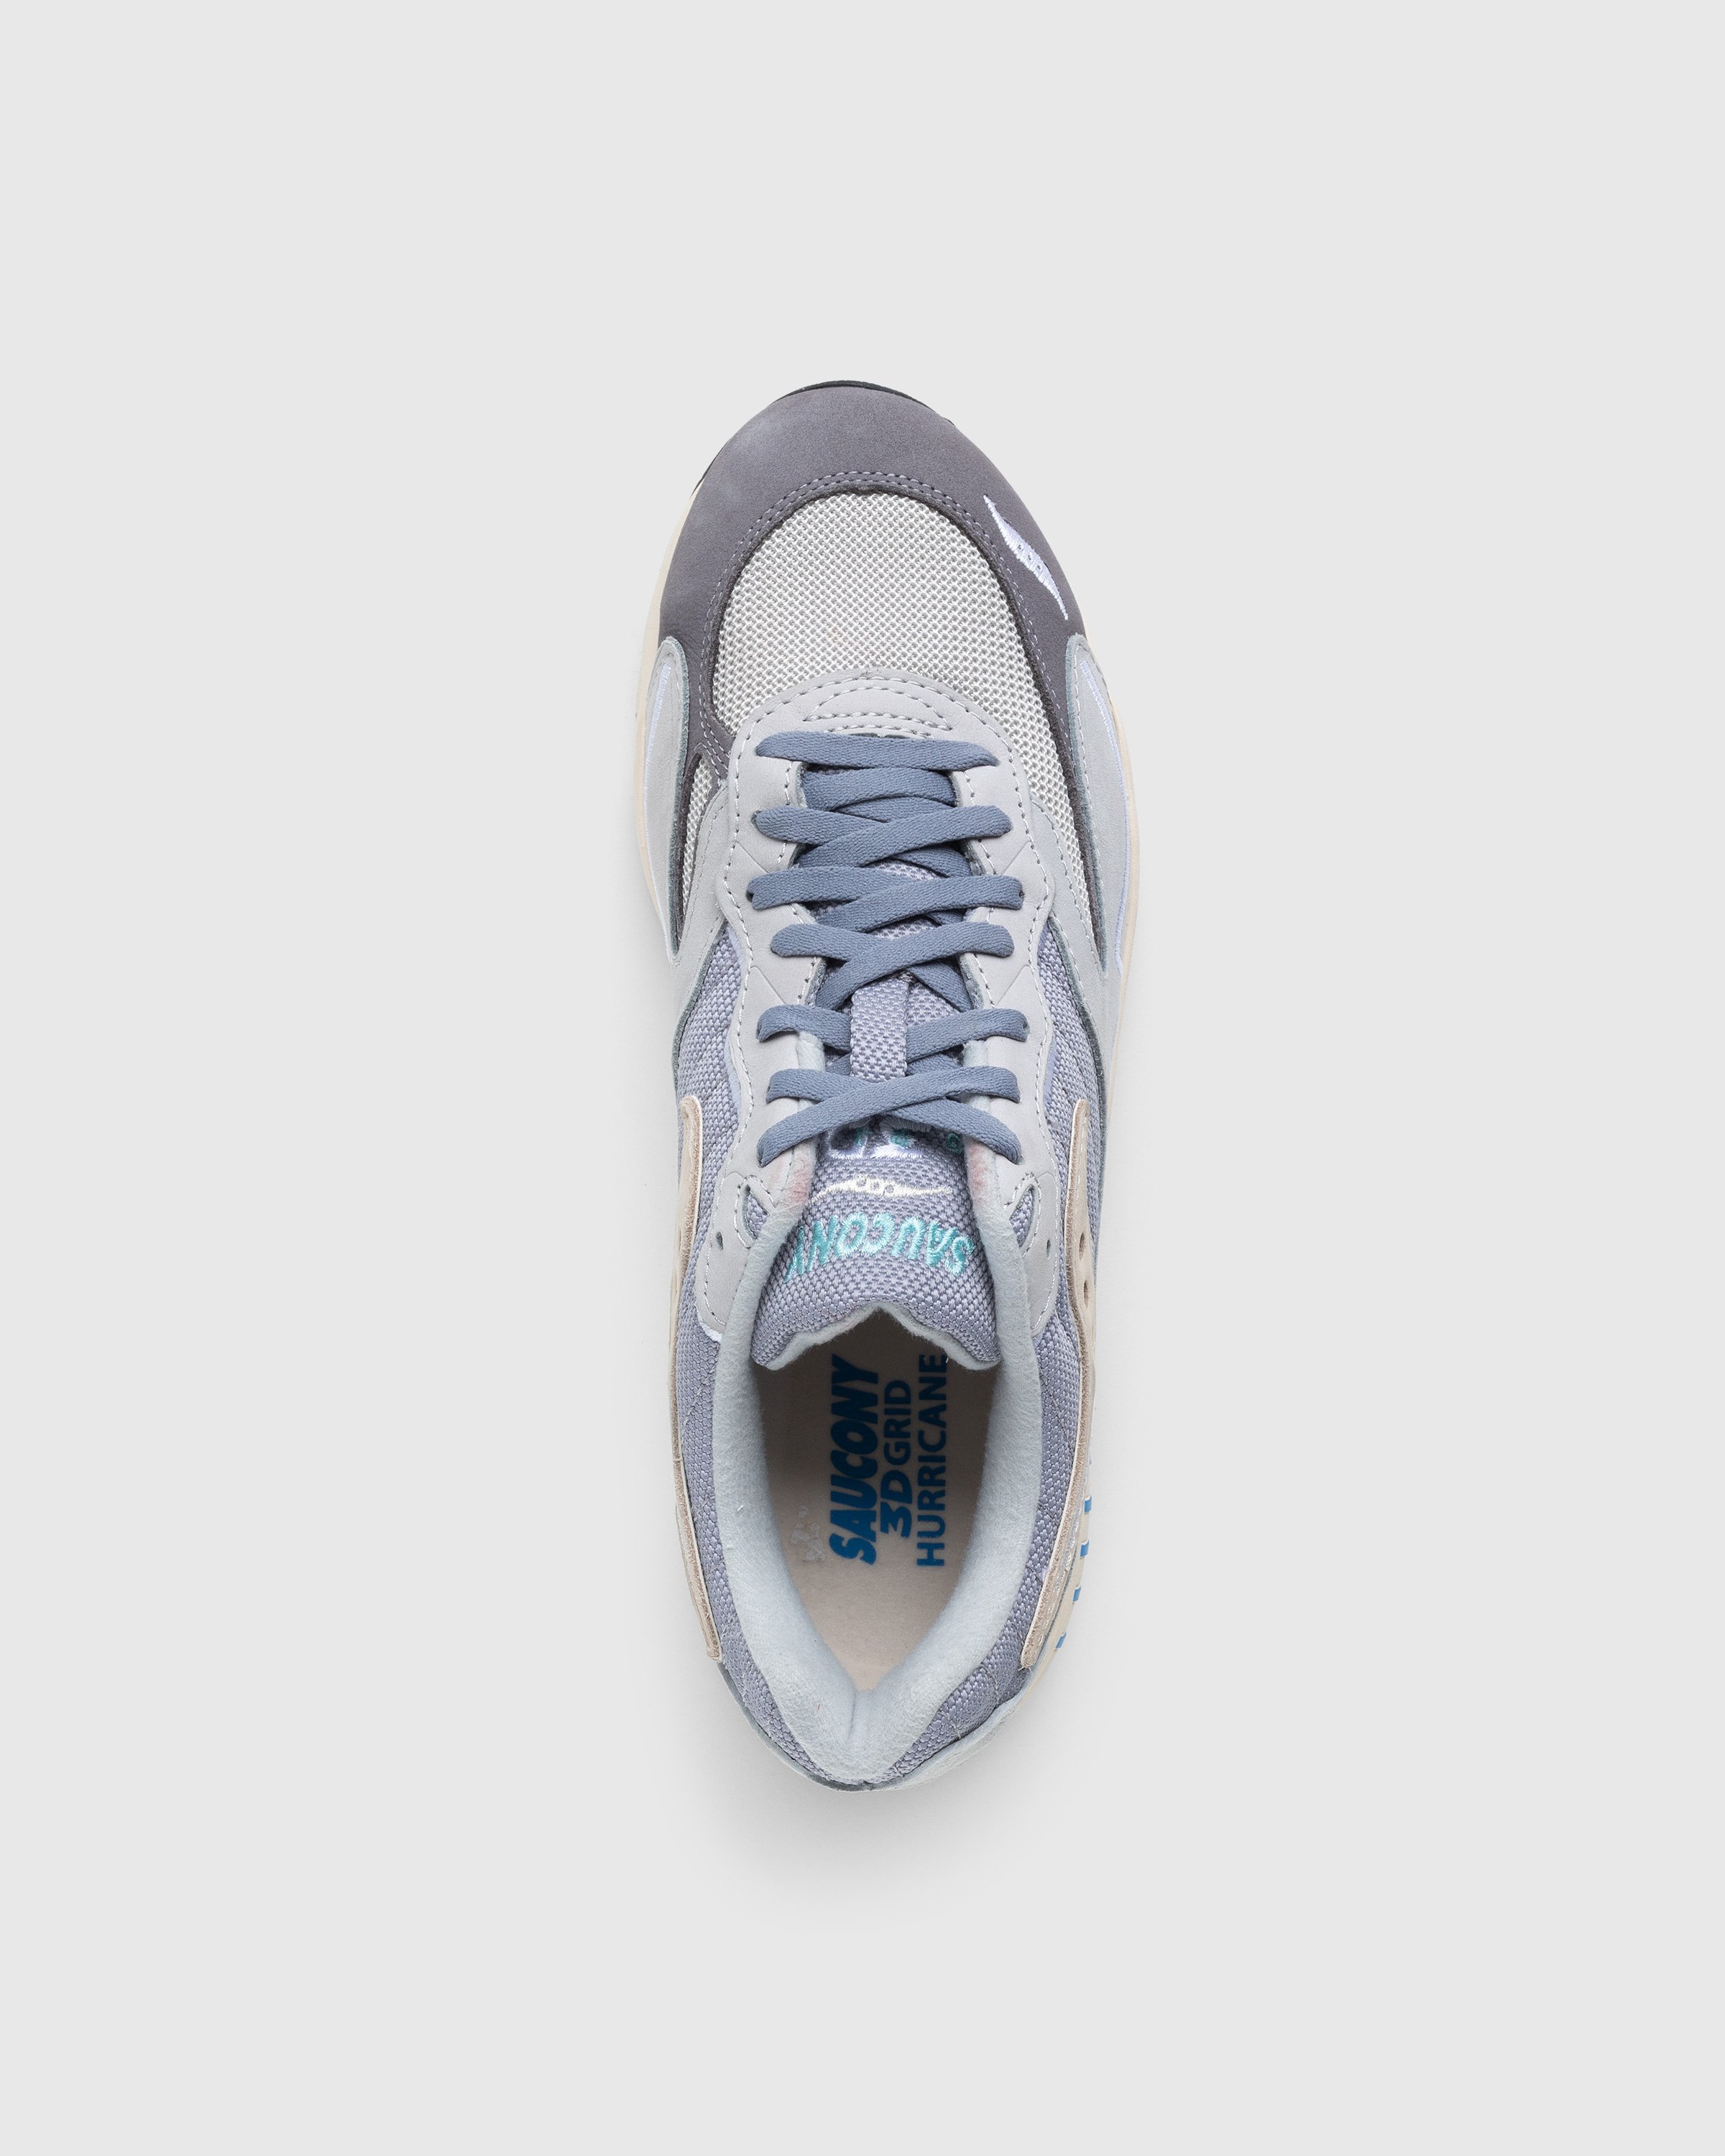 Saucony - 3D Grid Hurricane Grey/Cream - Footwear - Grey - Image 5